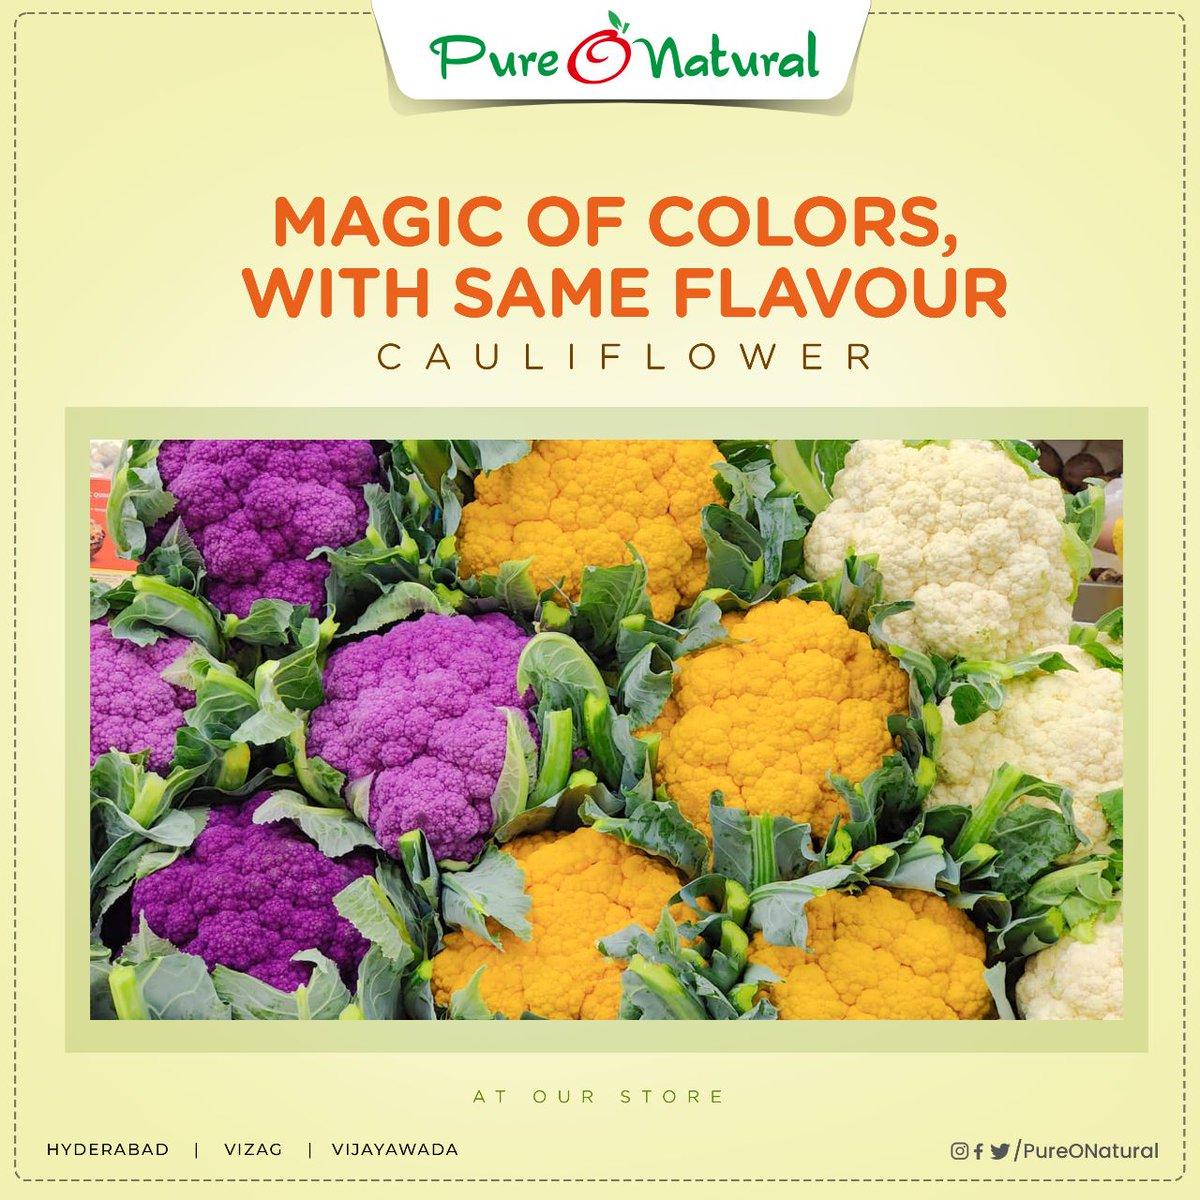 Get The Magic of Colours With The Same Flavours of Nature 🥦

#PureONatural #Cauliflower #FreshVeggies #Veggies #EatingHealthy #Hyderabad #Vizag #Vijaywada #FreshVegetables